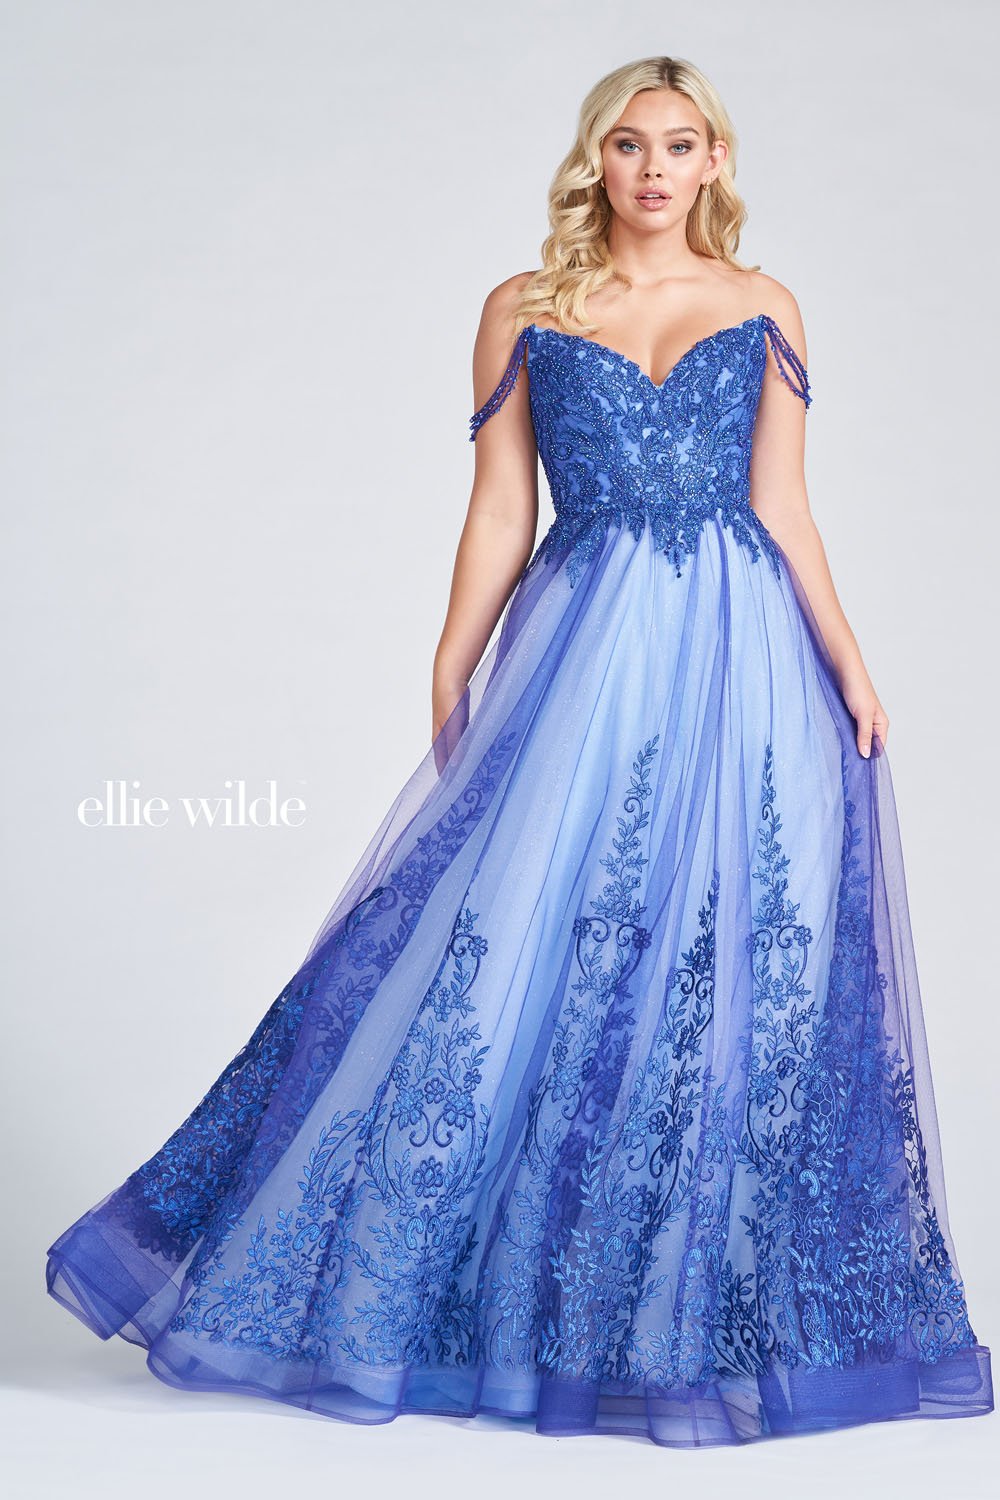 Ellie Wilde French Blue EW122019 Prom Dress Image.  French Blue formal dress.